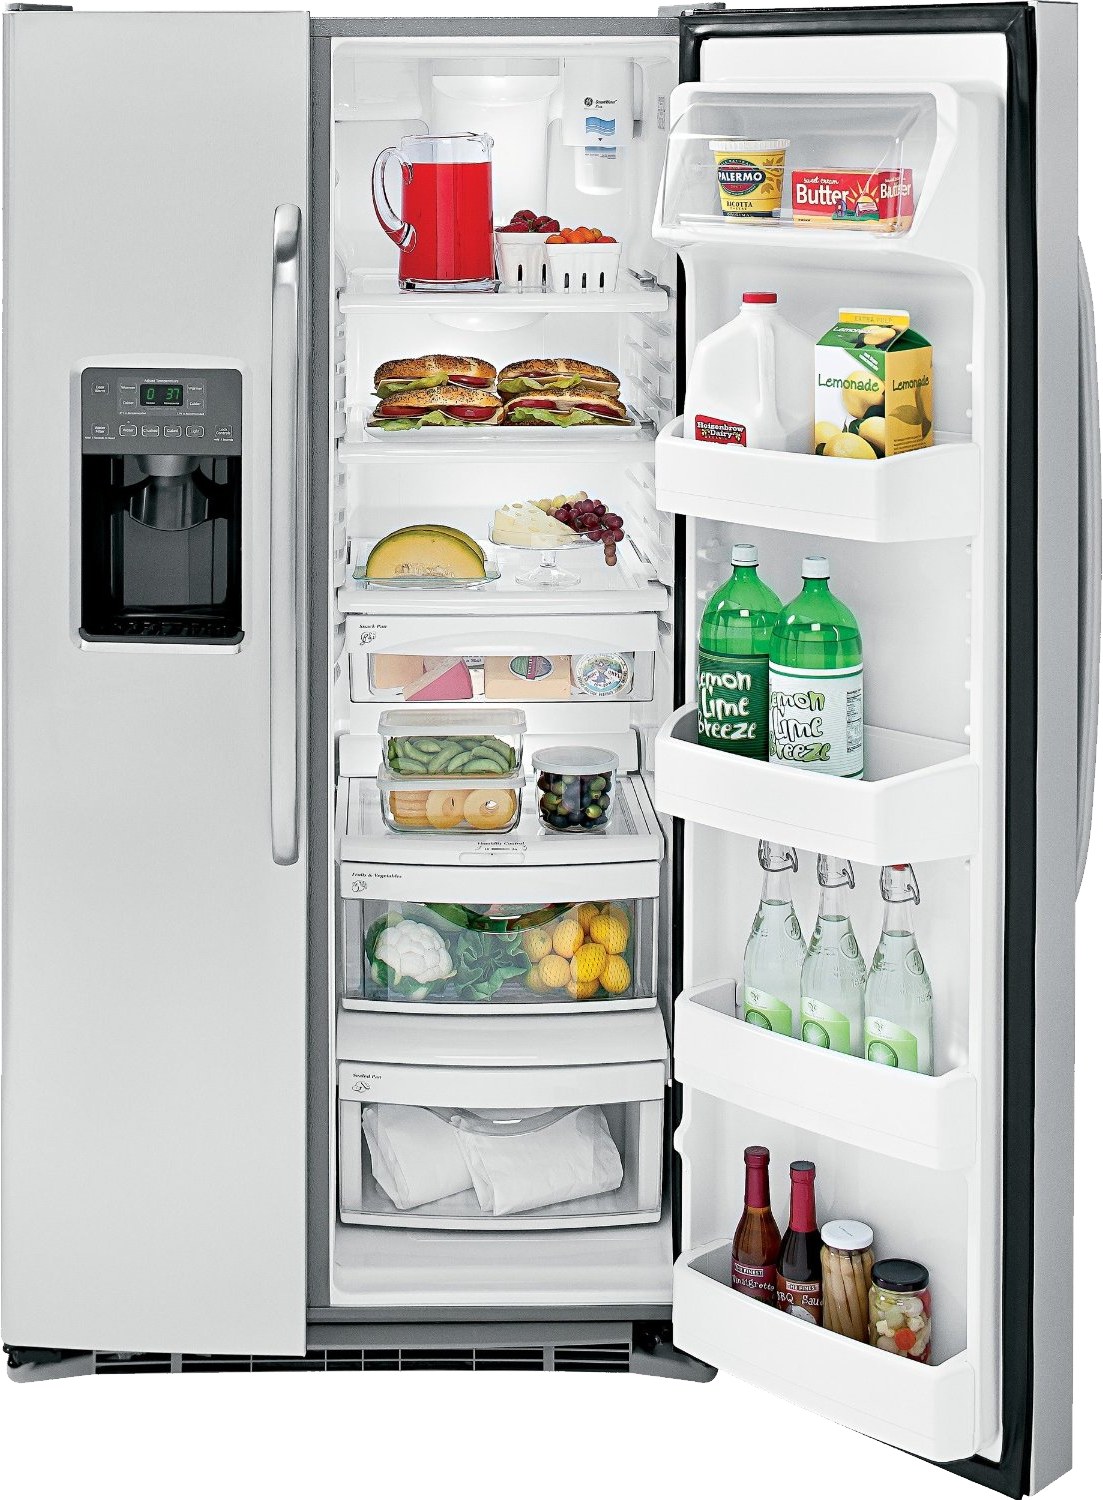 Download Refrigerator PNG ima